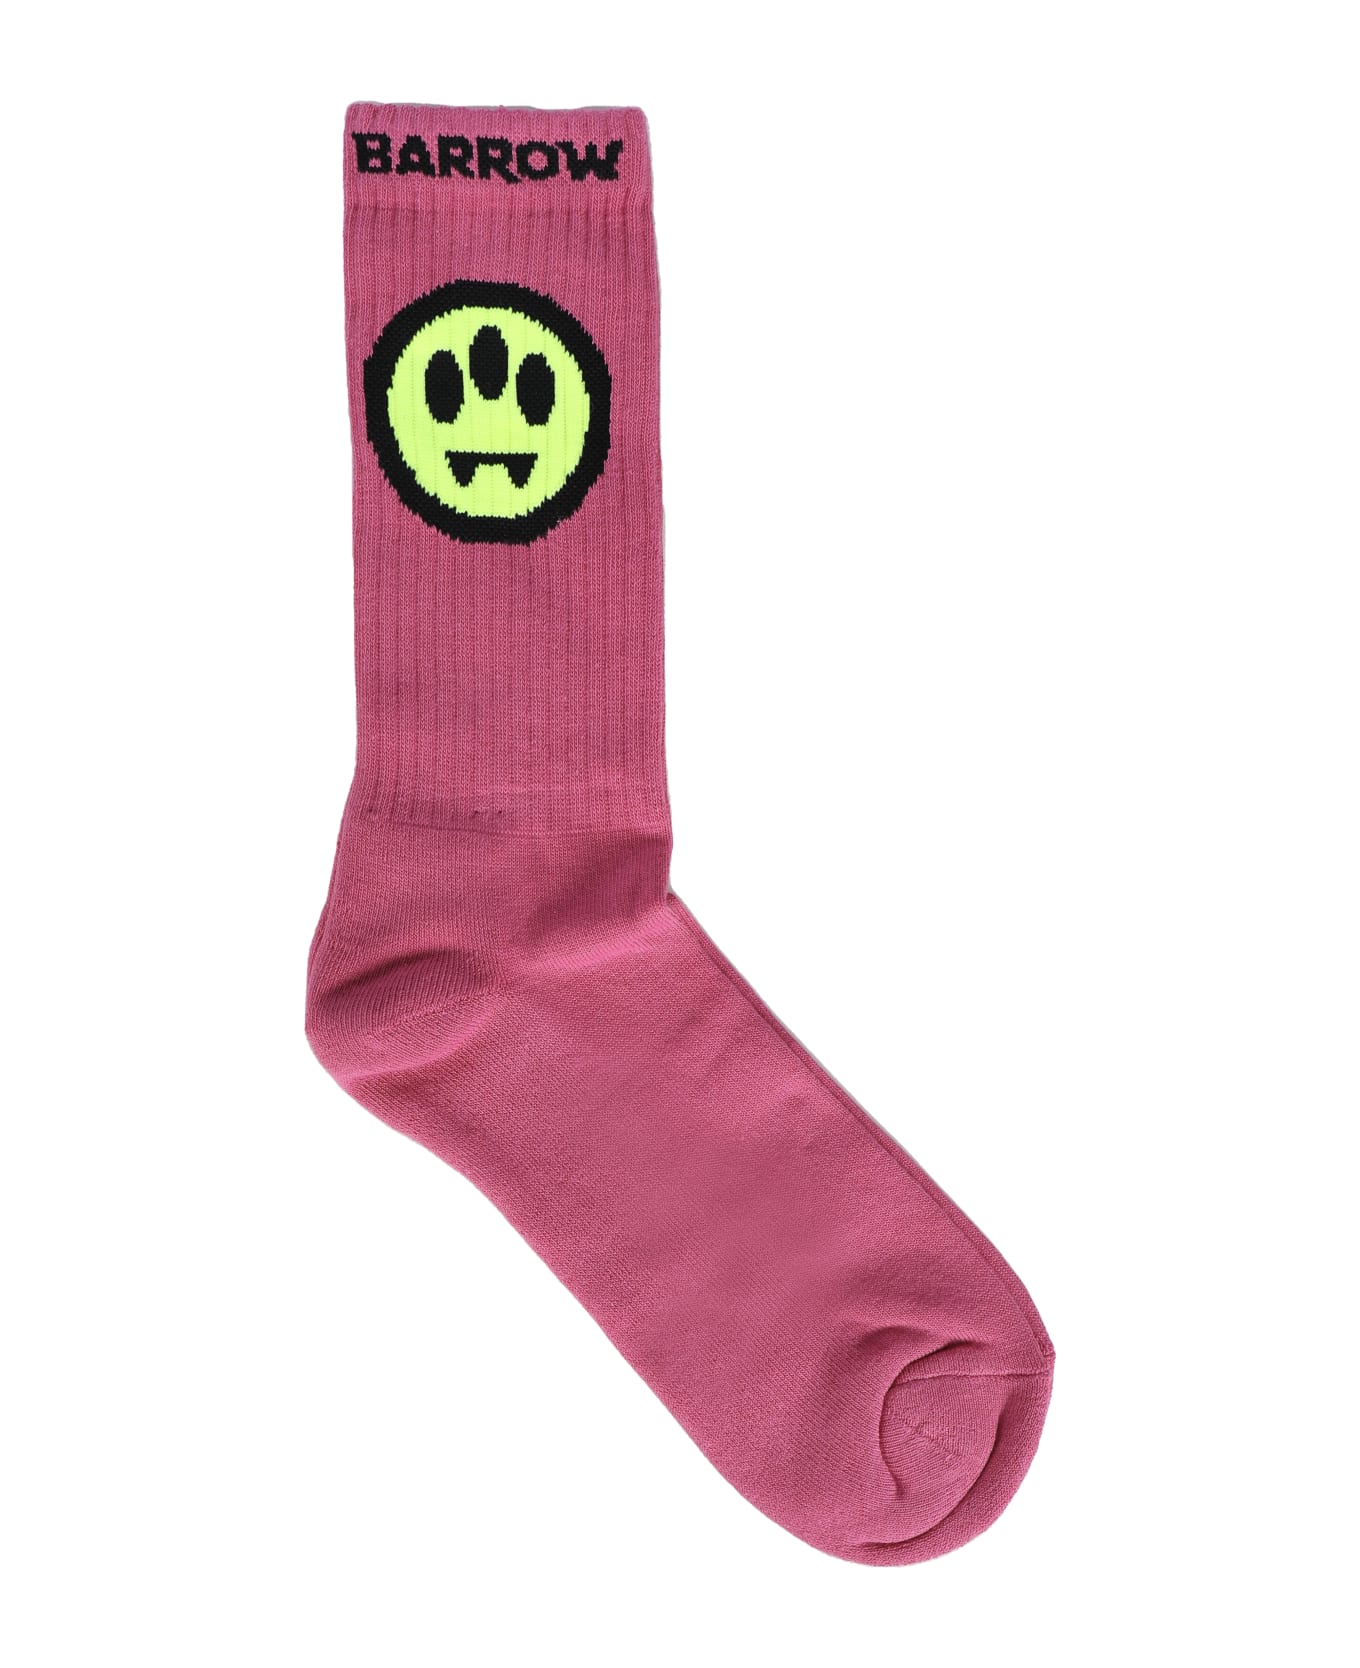 Barrow Logo Socks - Hot pink